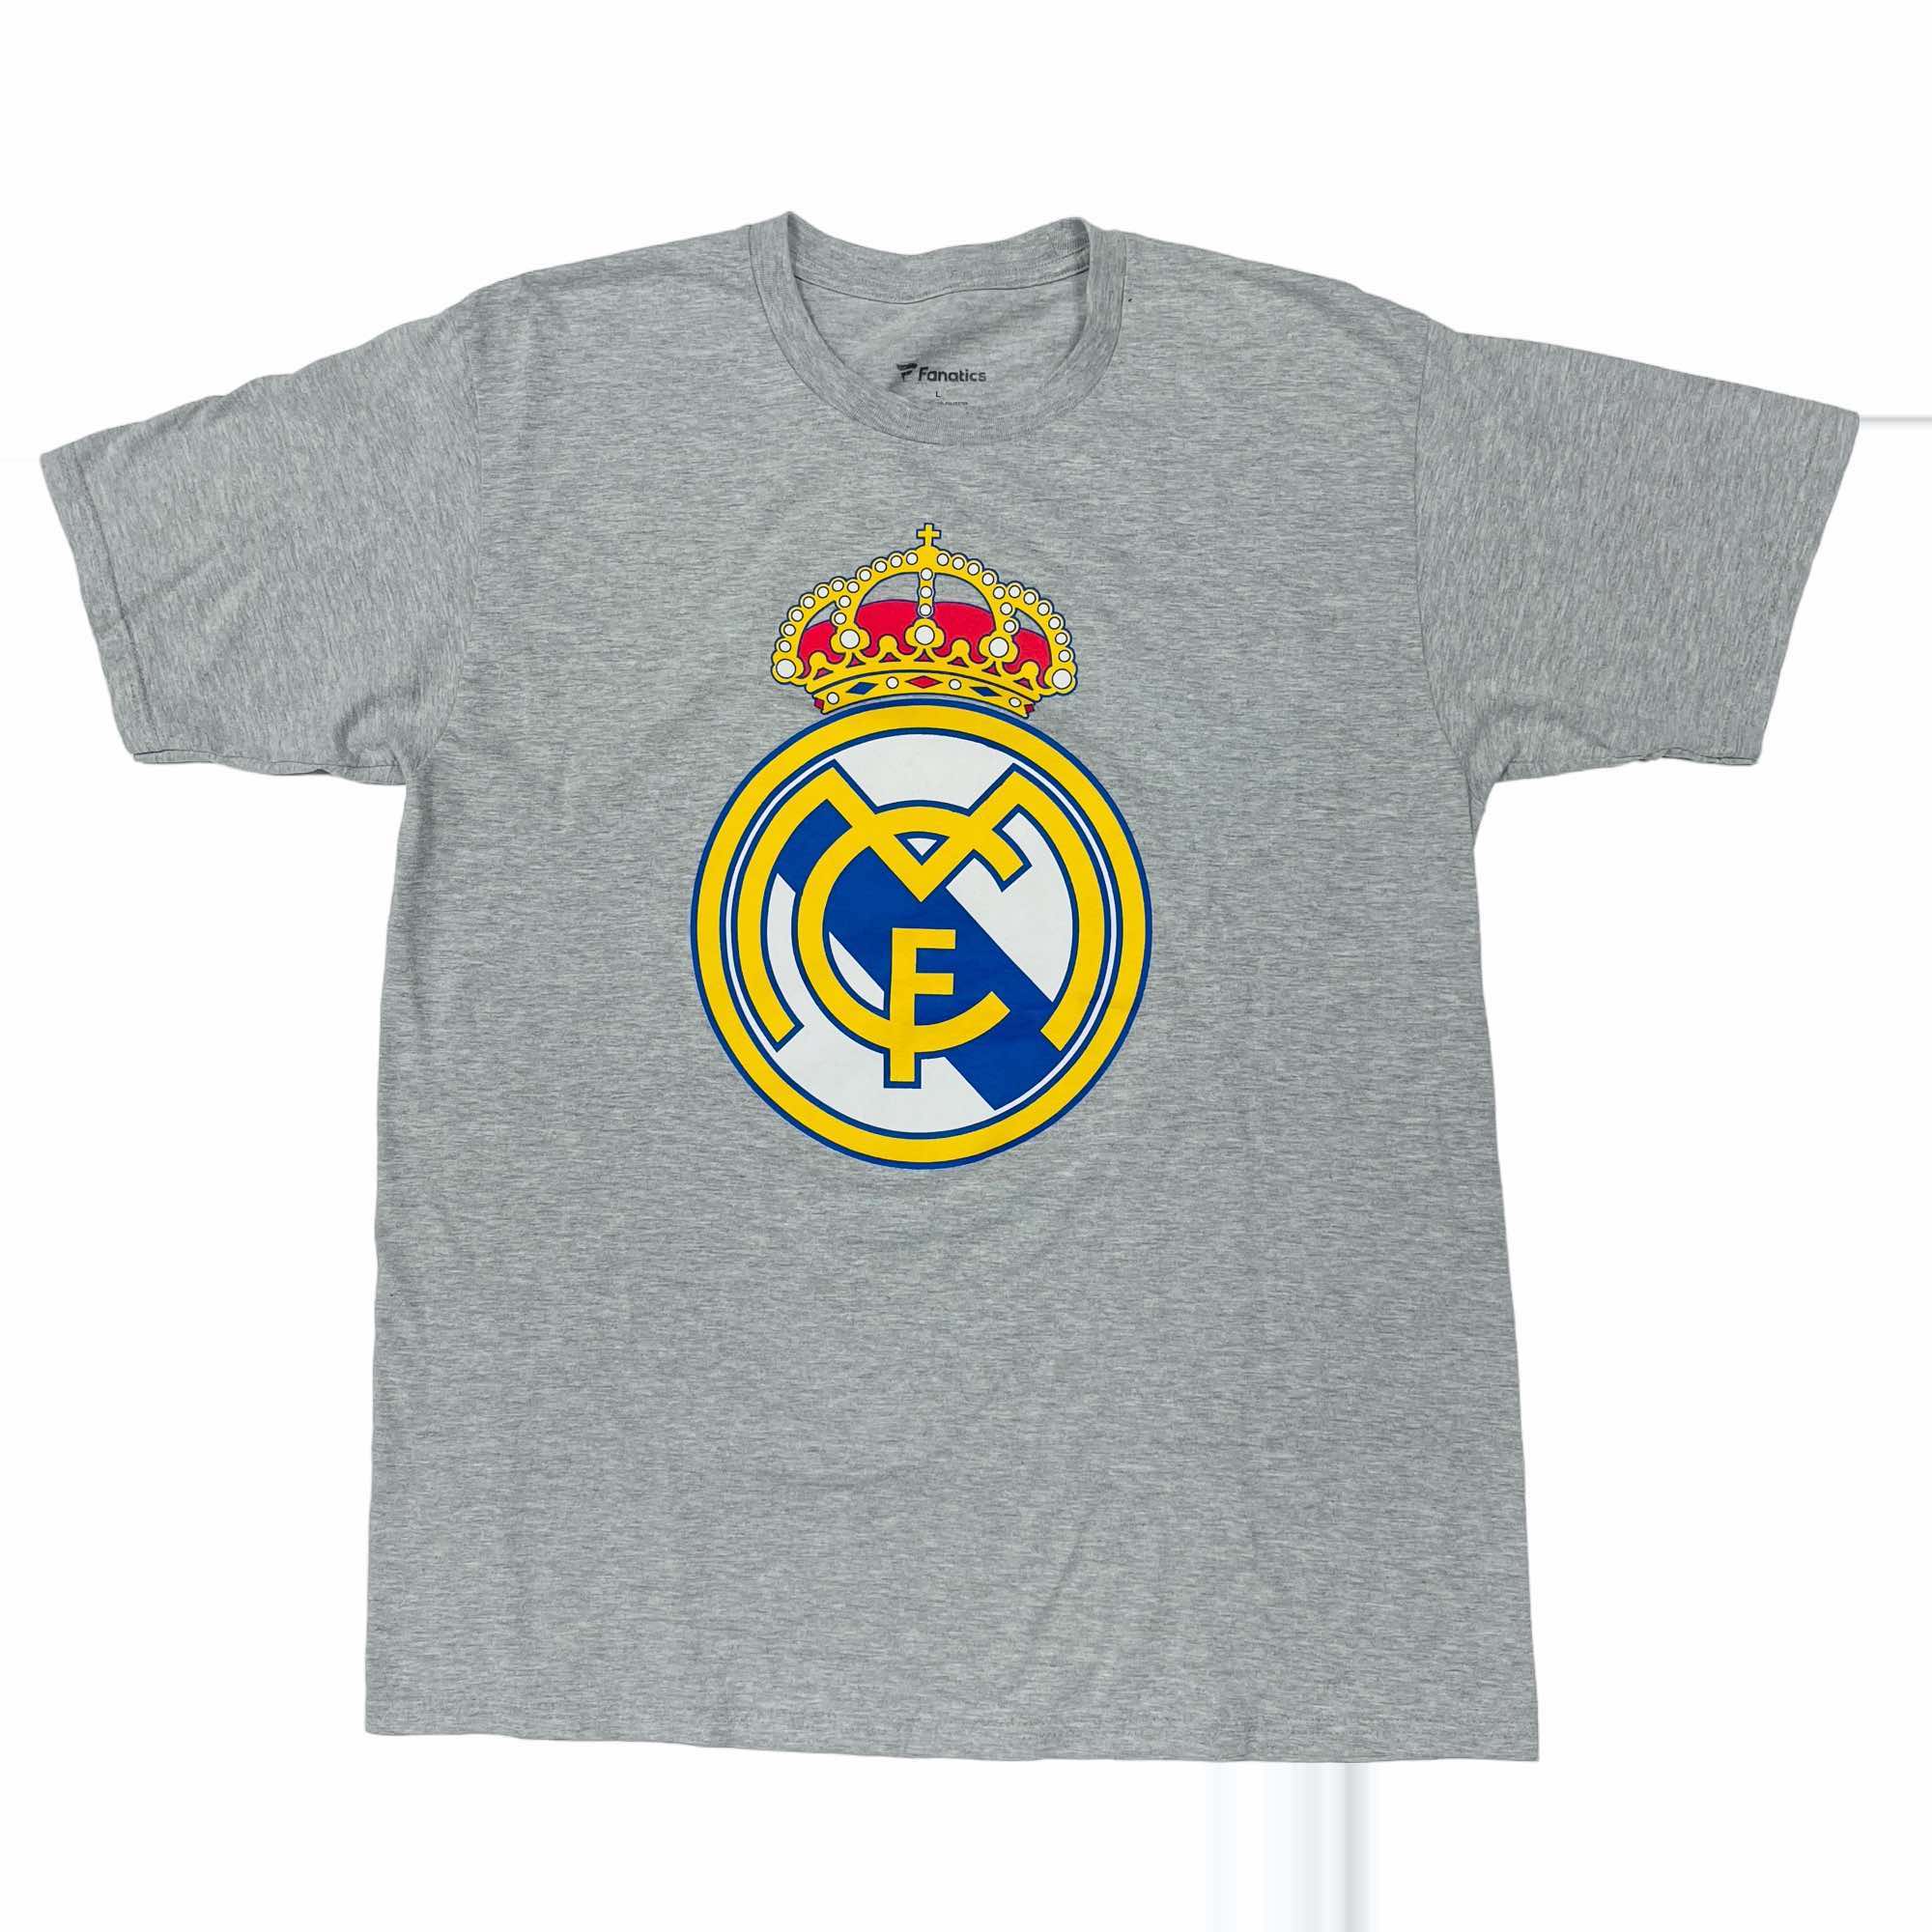 Real Madrid T-Shirt - Large